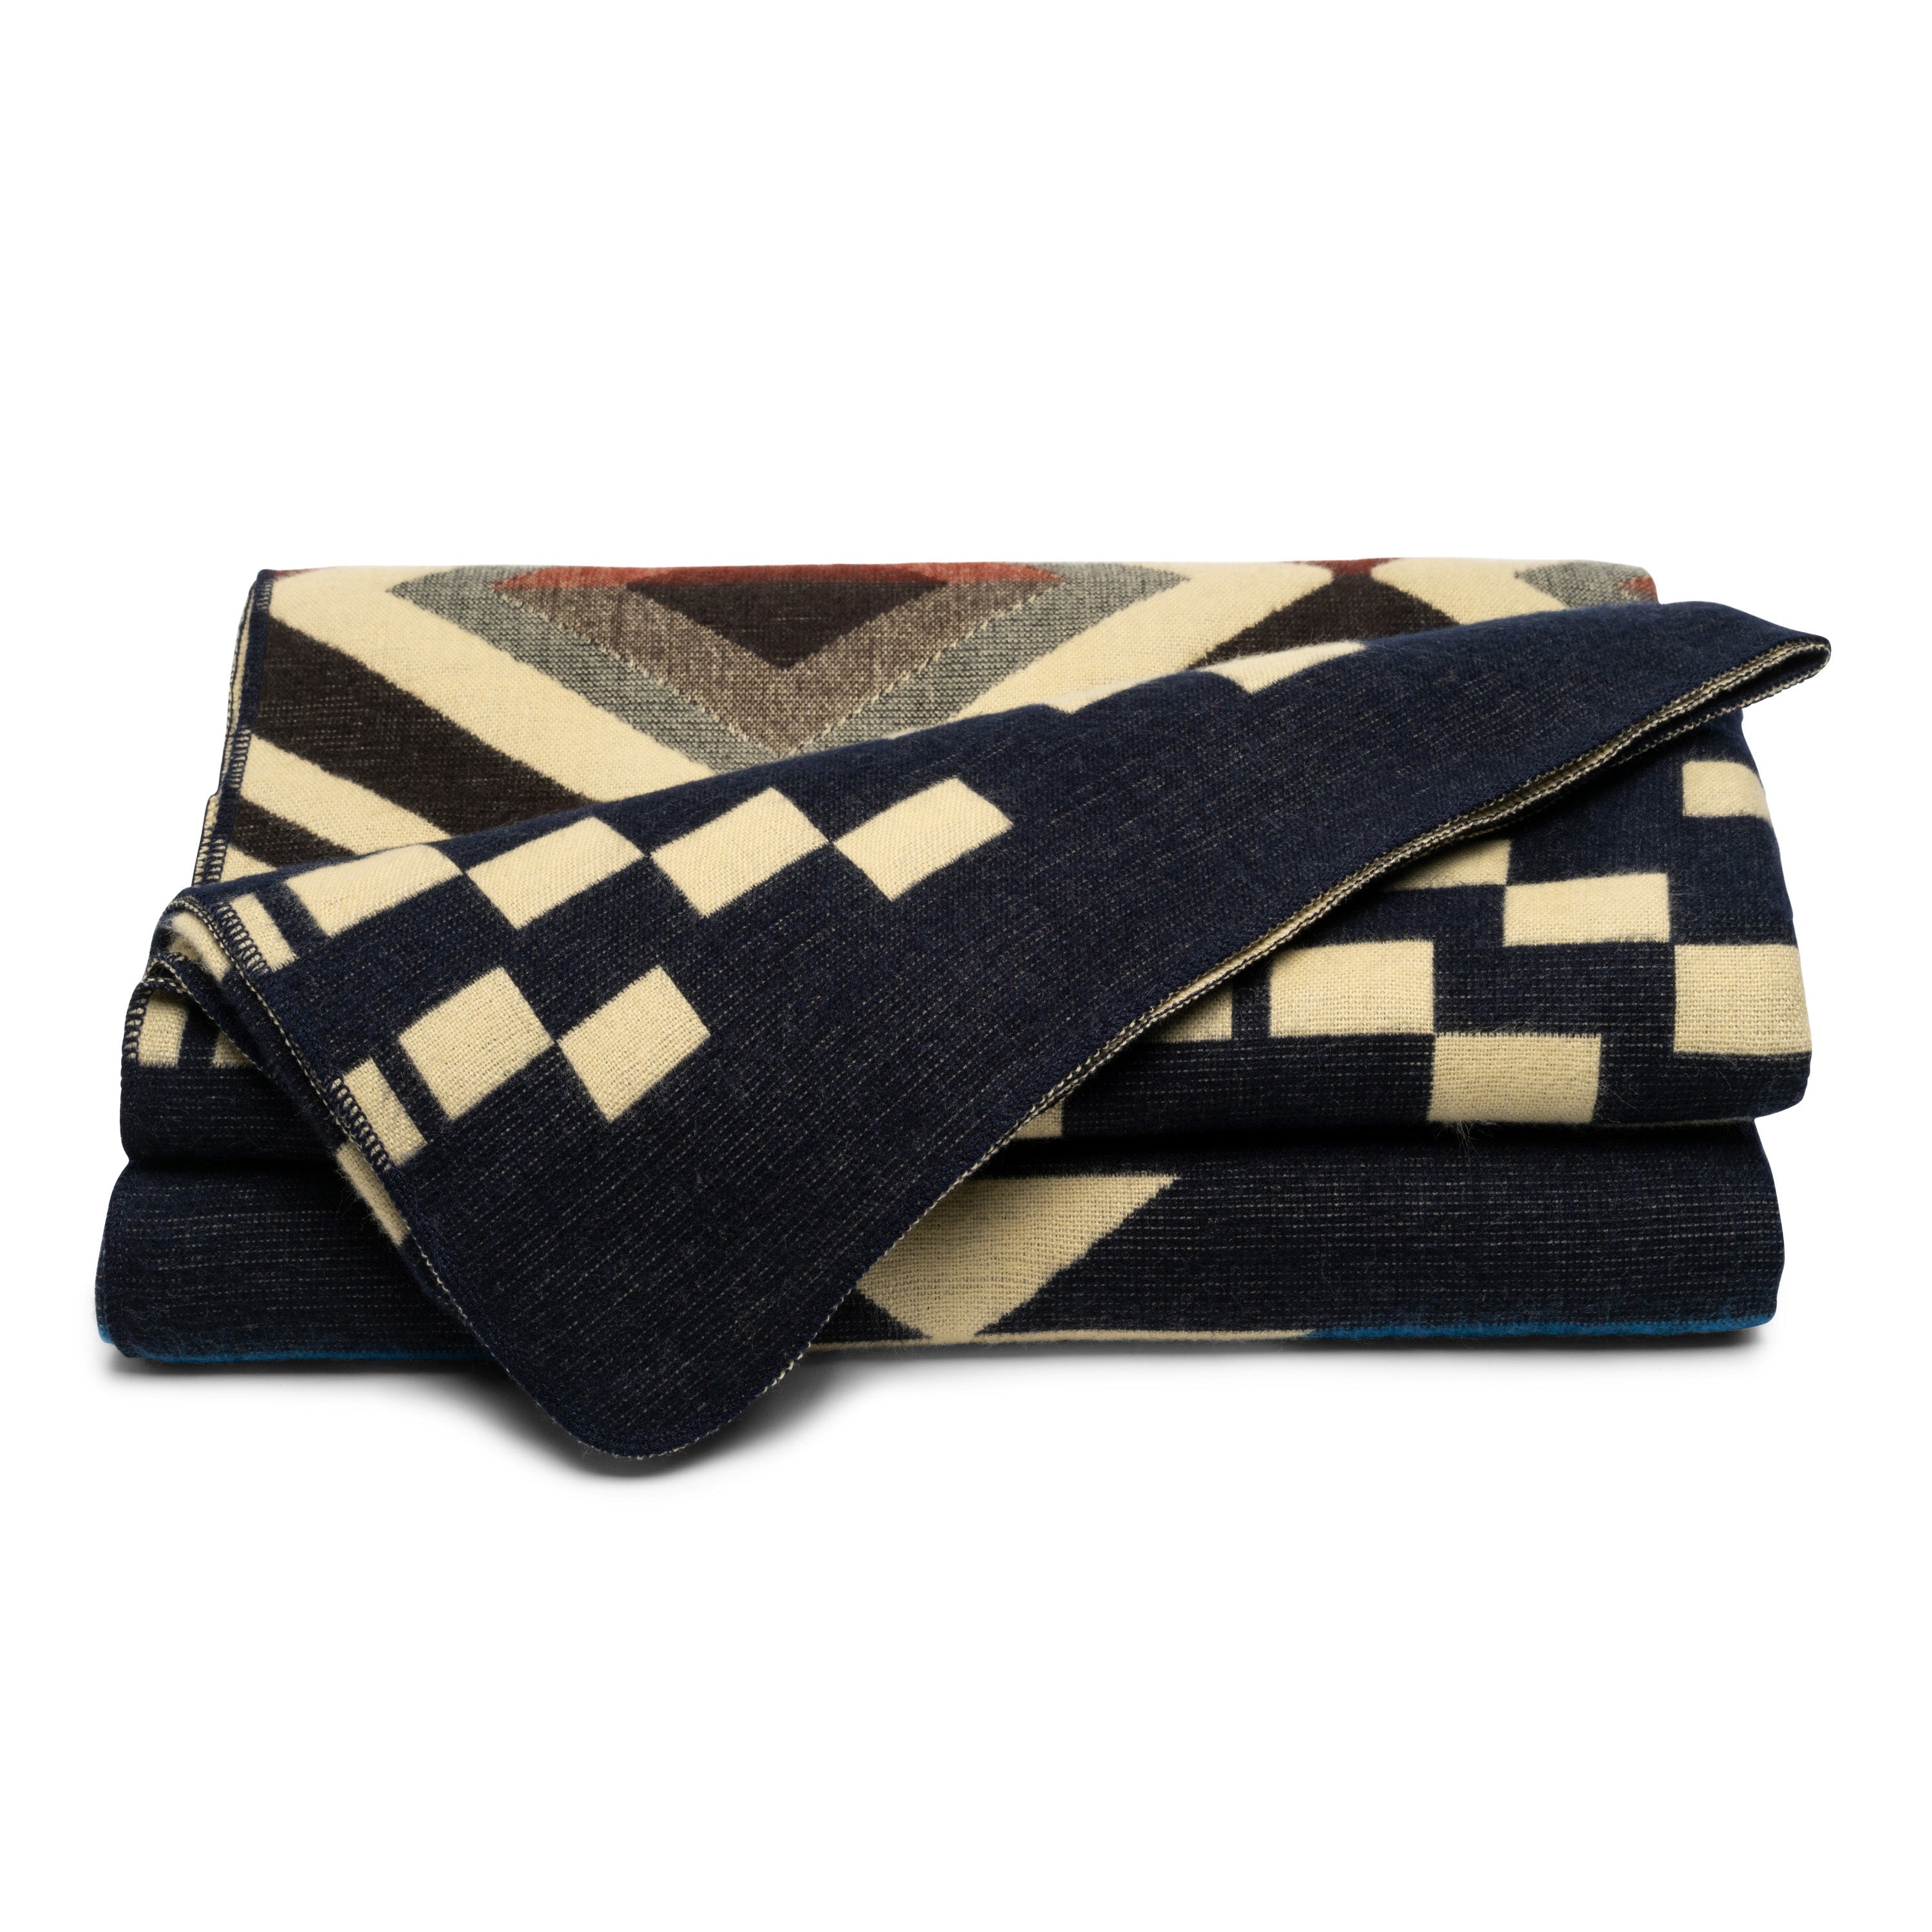 QISU Alpaca Wool Throw Blanket - Large, Thick and Geometric Blanket - QISU